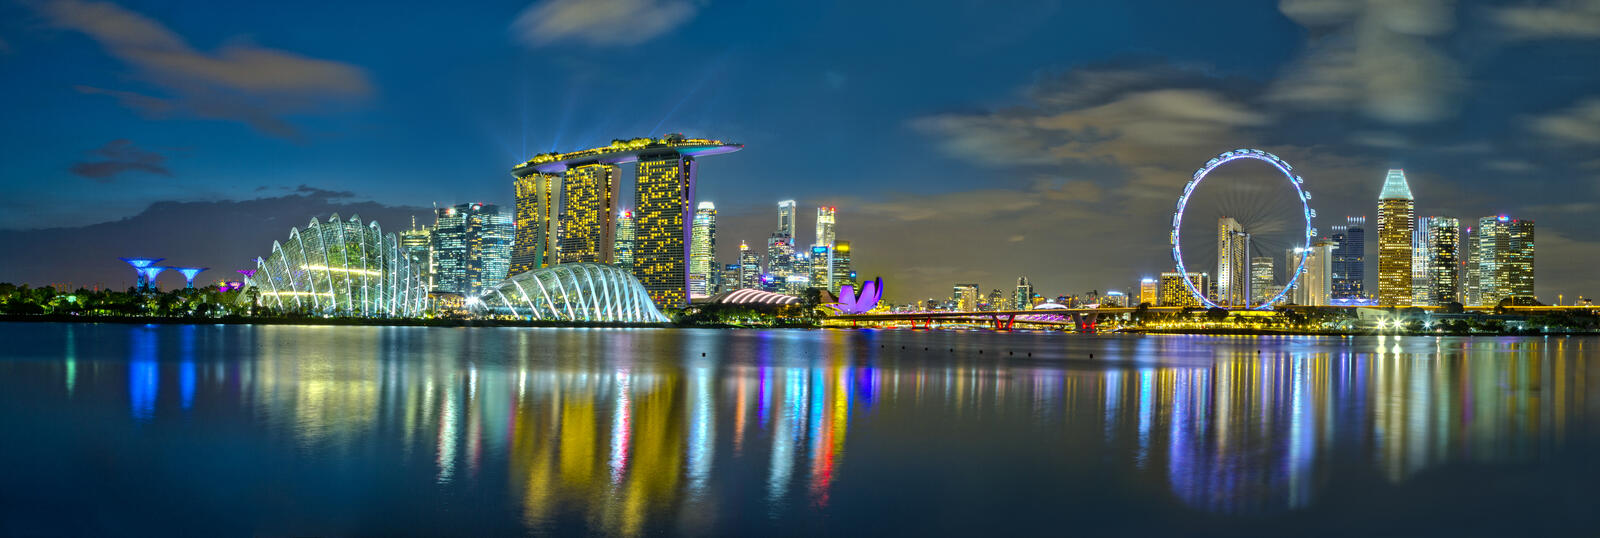 Wallpapers Singapore light panorama on the desktop